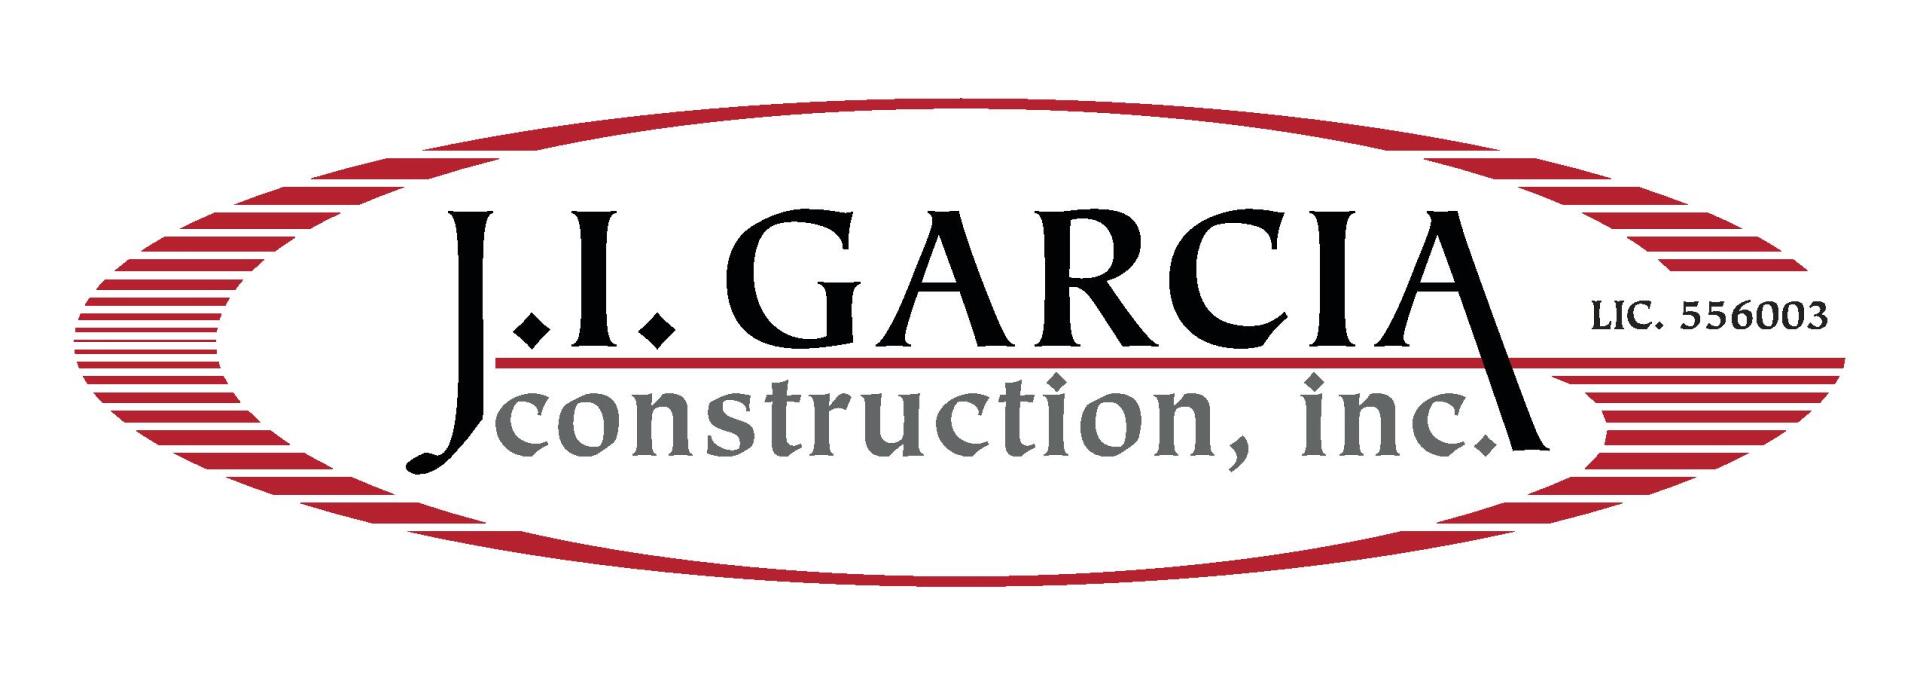 ji garcia construction general contractor california